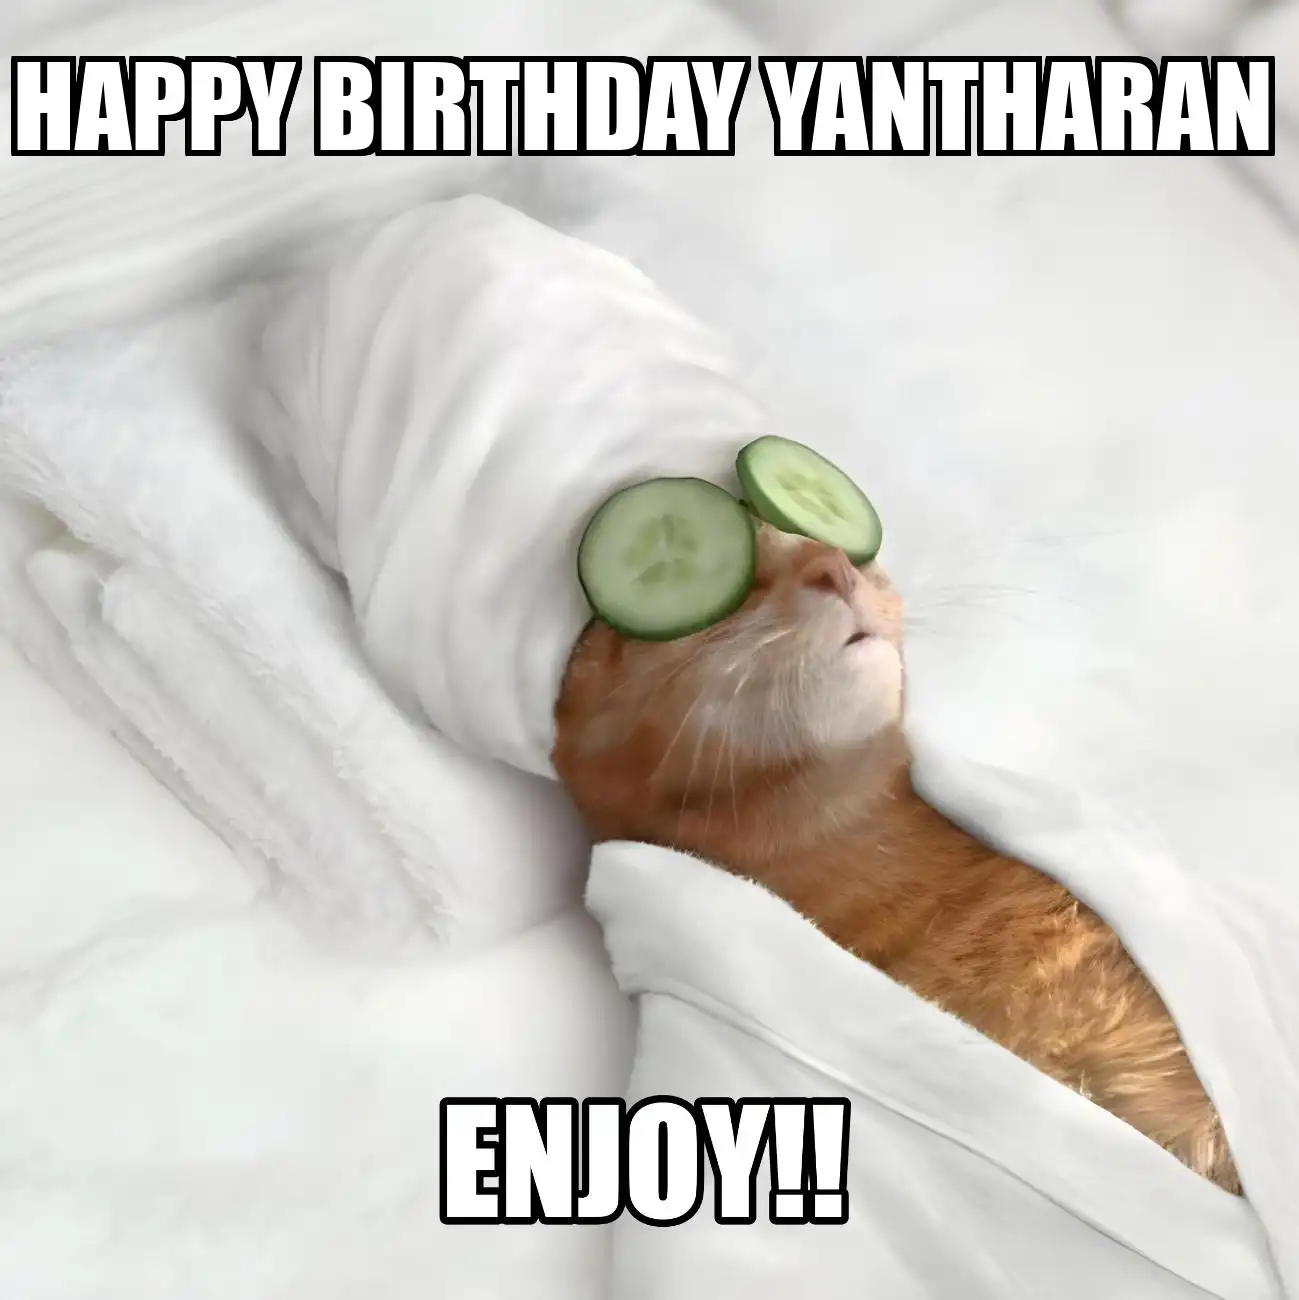 Happy Birthday Yantharan Enjoy Cat Meme